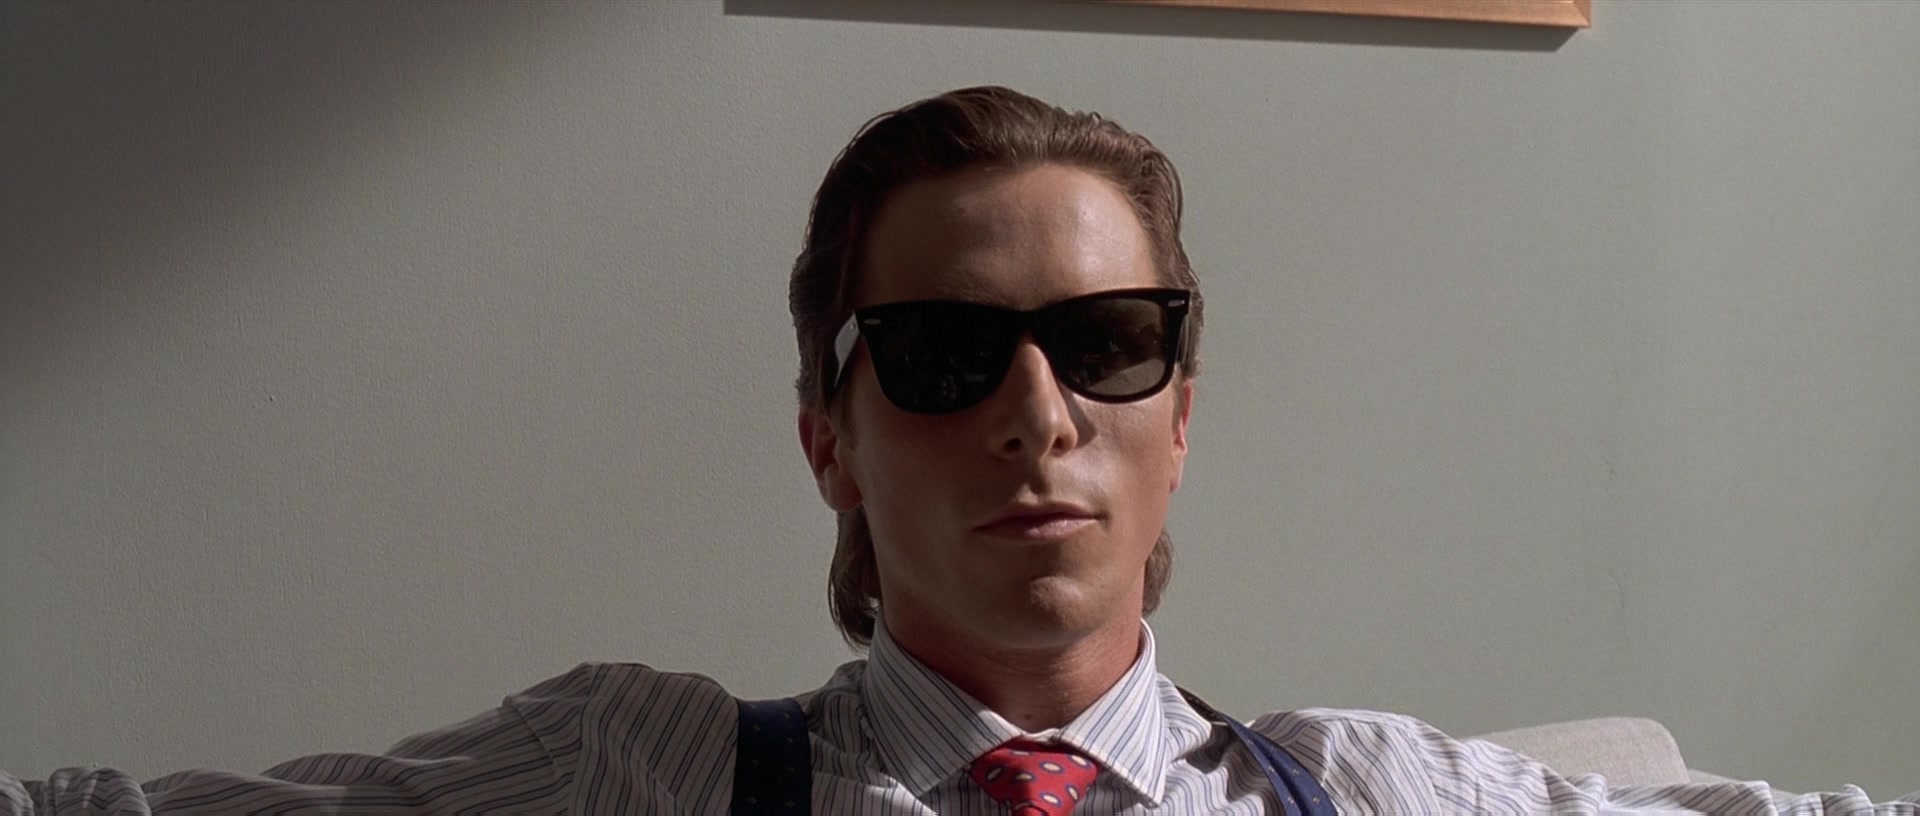 Ray-Ban Wayfarer Sunglasses Worn by Christian Bale as Patrick Bateman in Am...